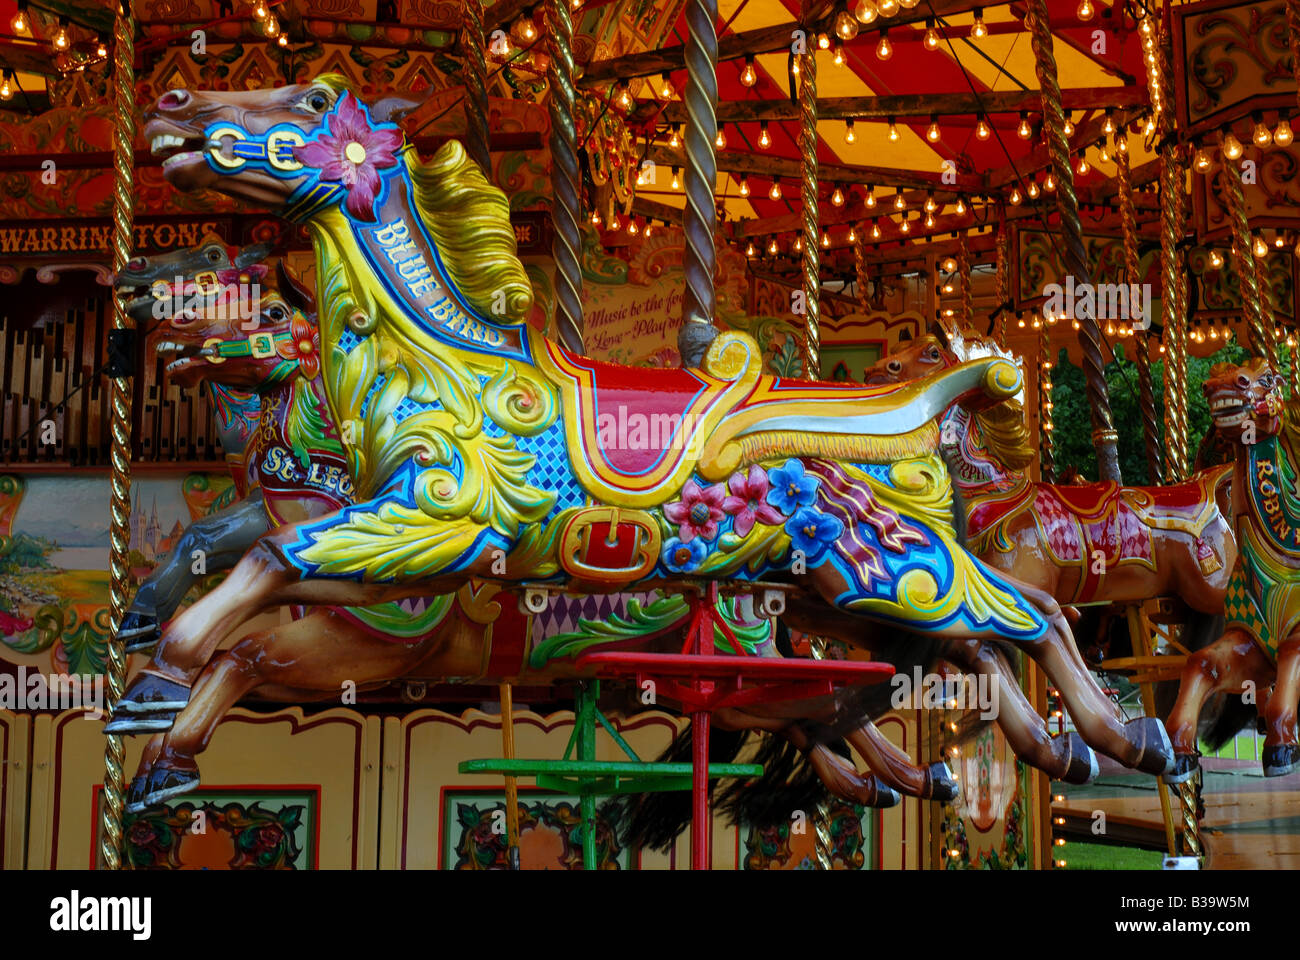 Carousel Horse Stock Photo